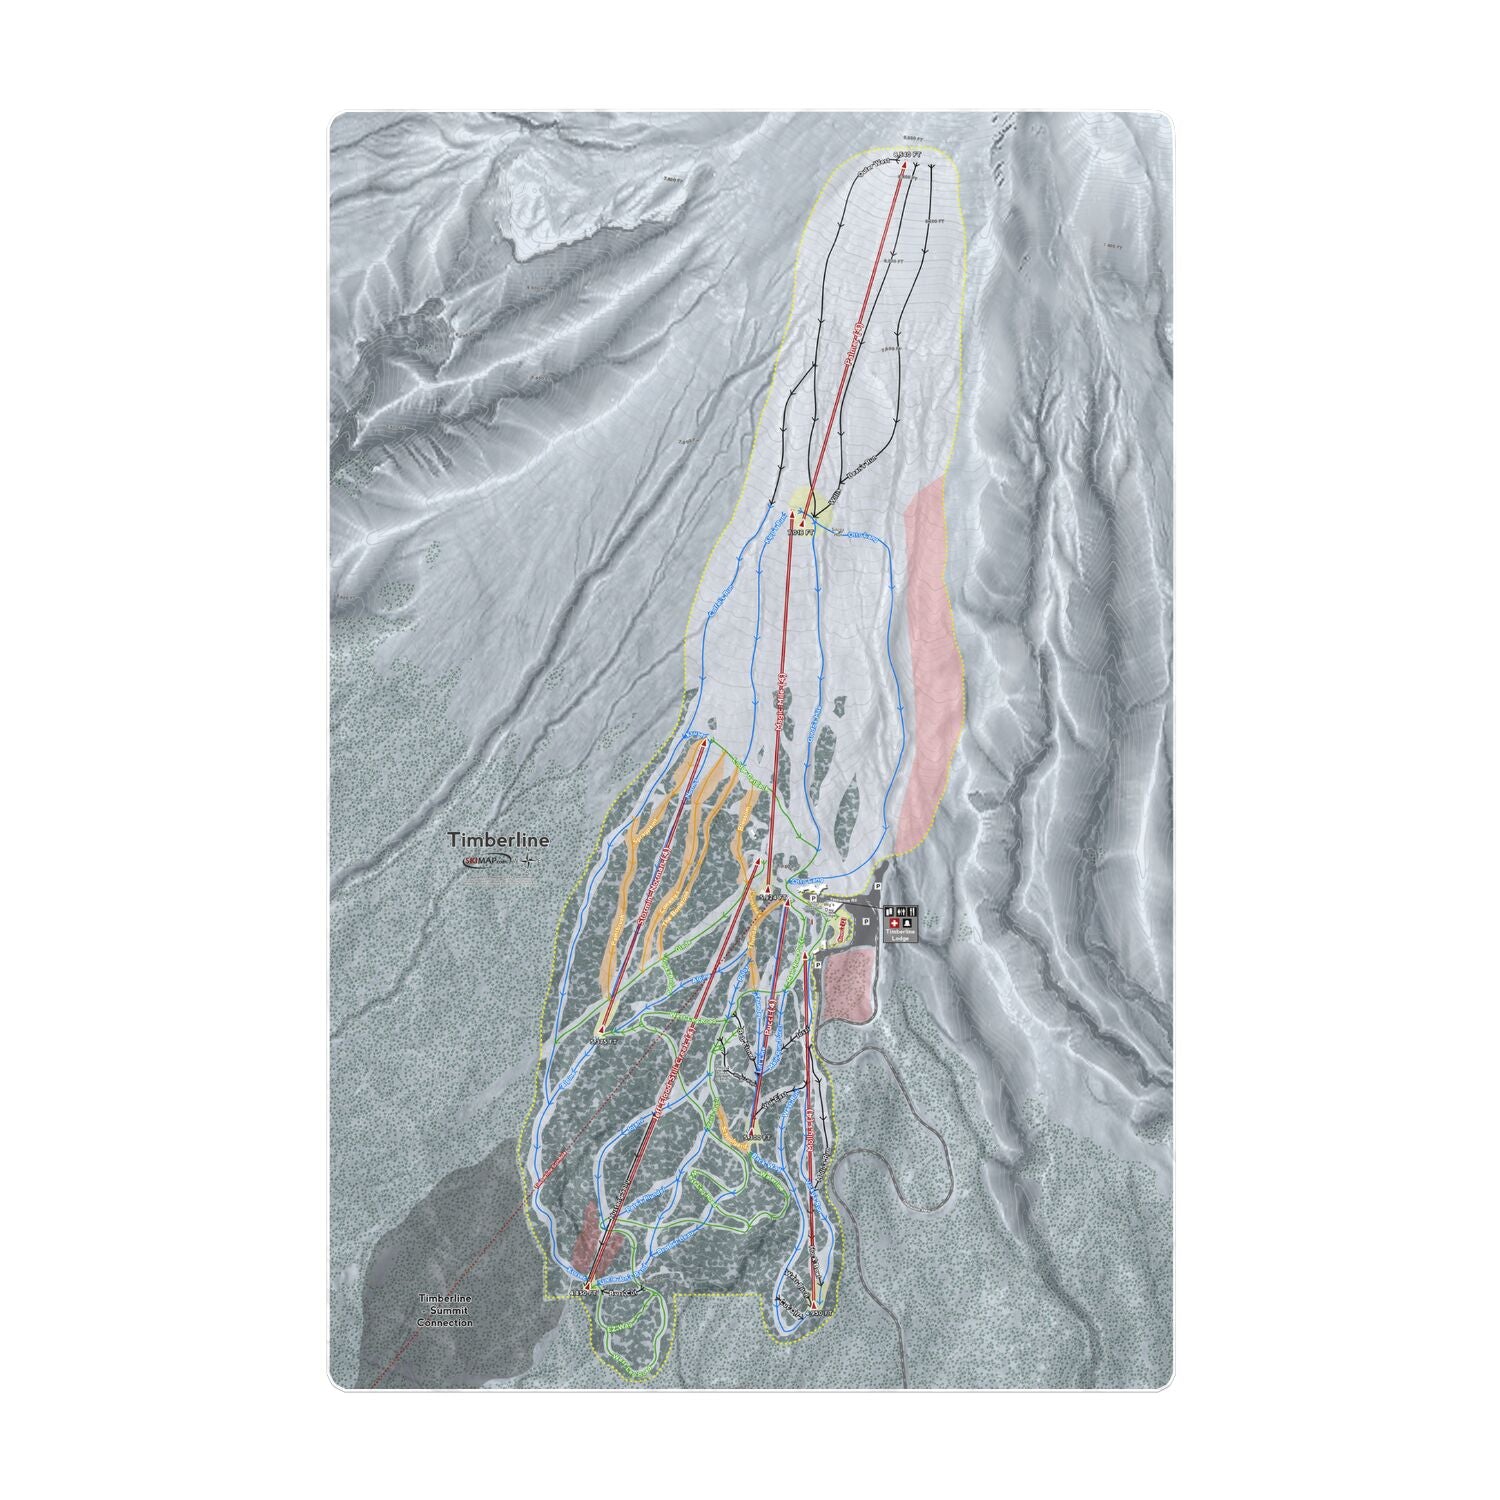 Timberline, Oregon Ski Resort Map Printed Beach Towel - Powderaddicts